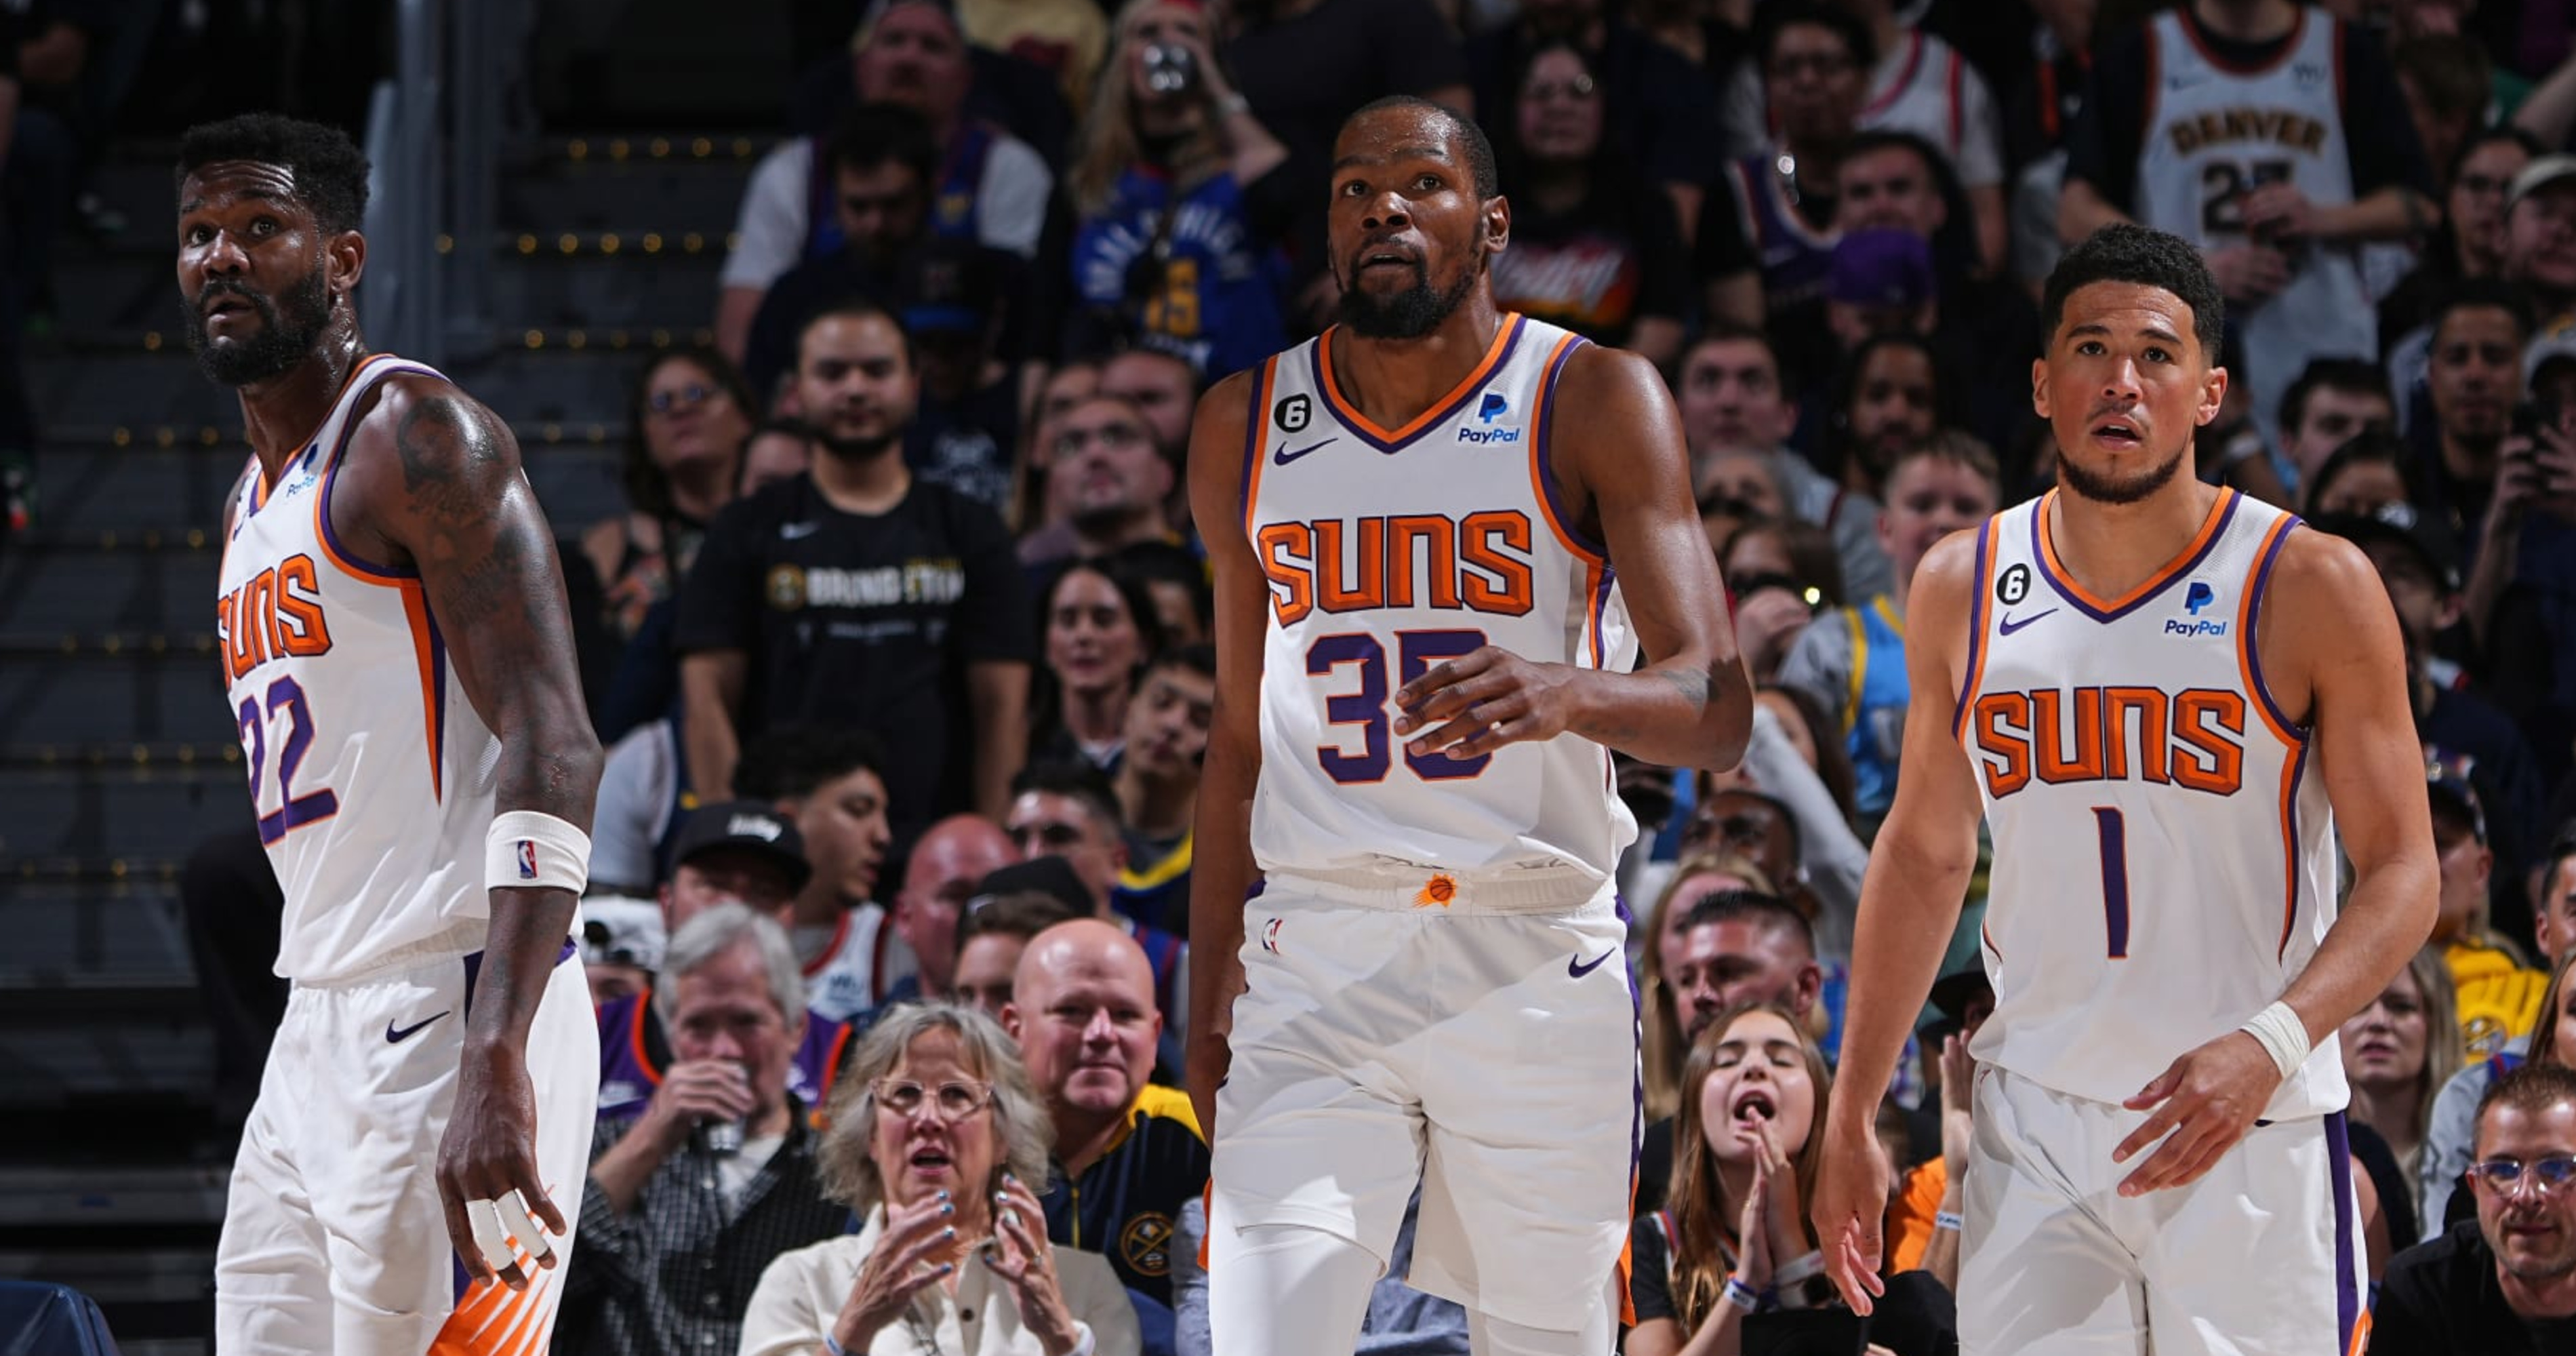 Suns' Roster, Lineup, Salary Cap, Draft Picks After Cam Payne Trade